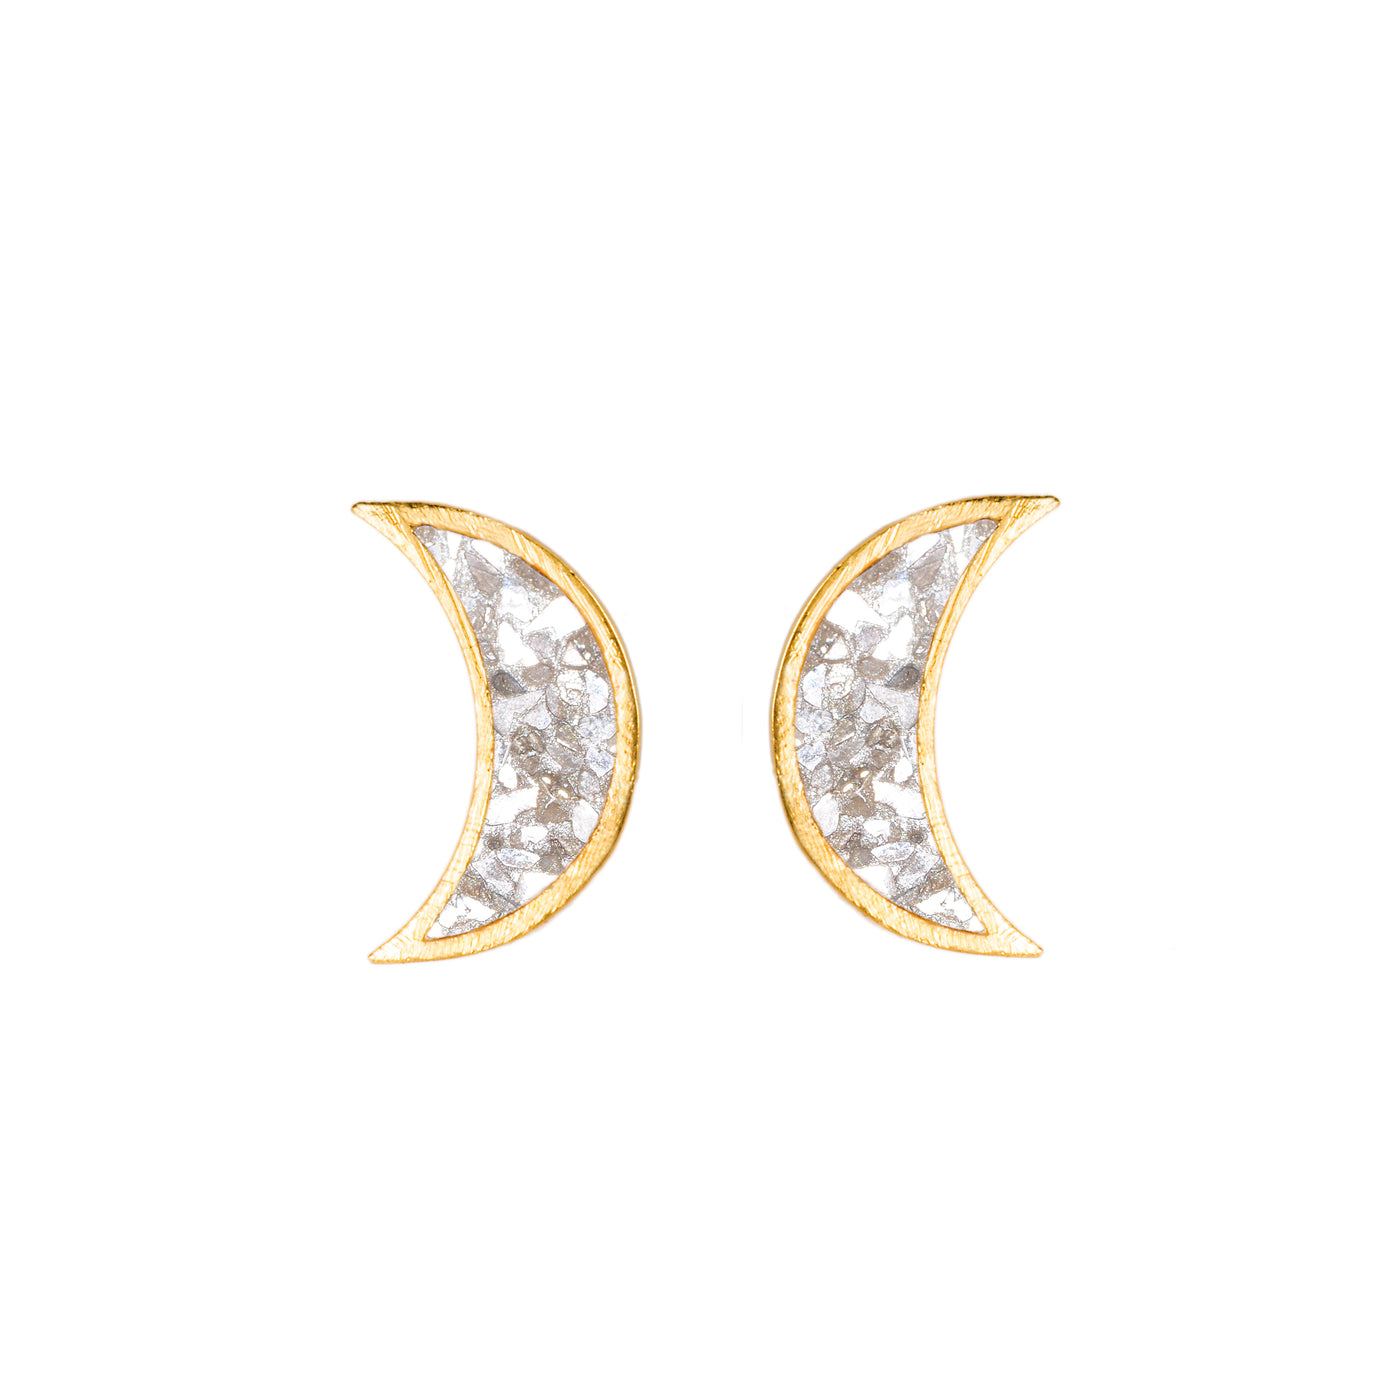 Crescent moon shaped diamond studs